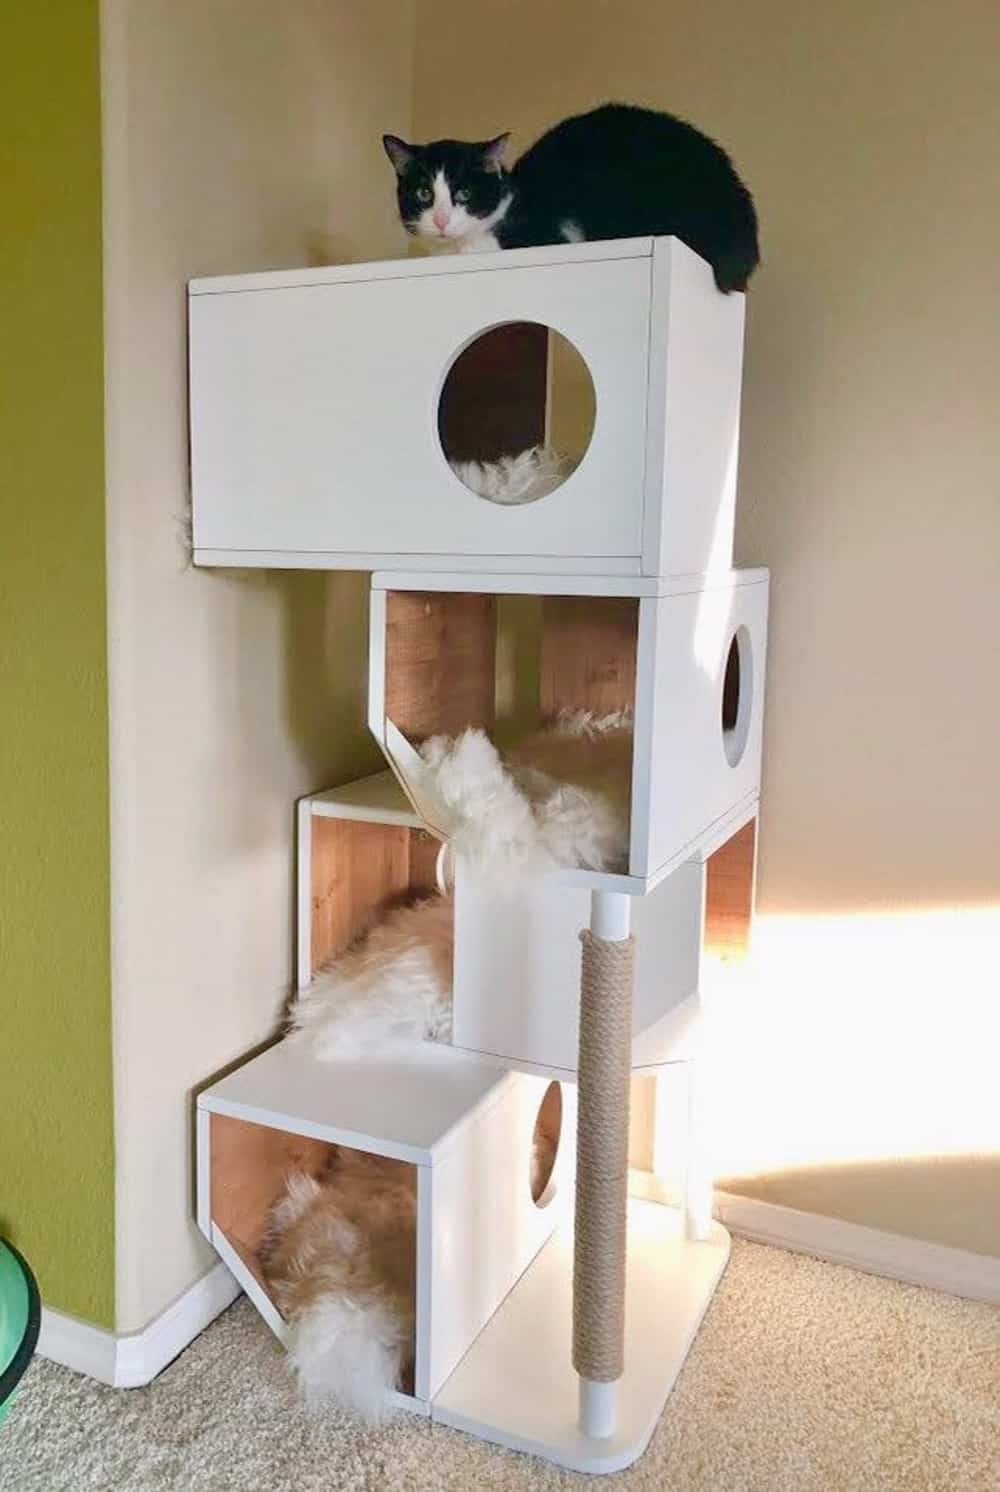 DIY Cat Tree House